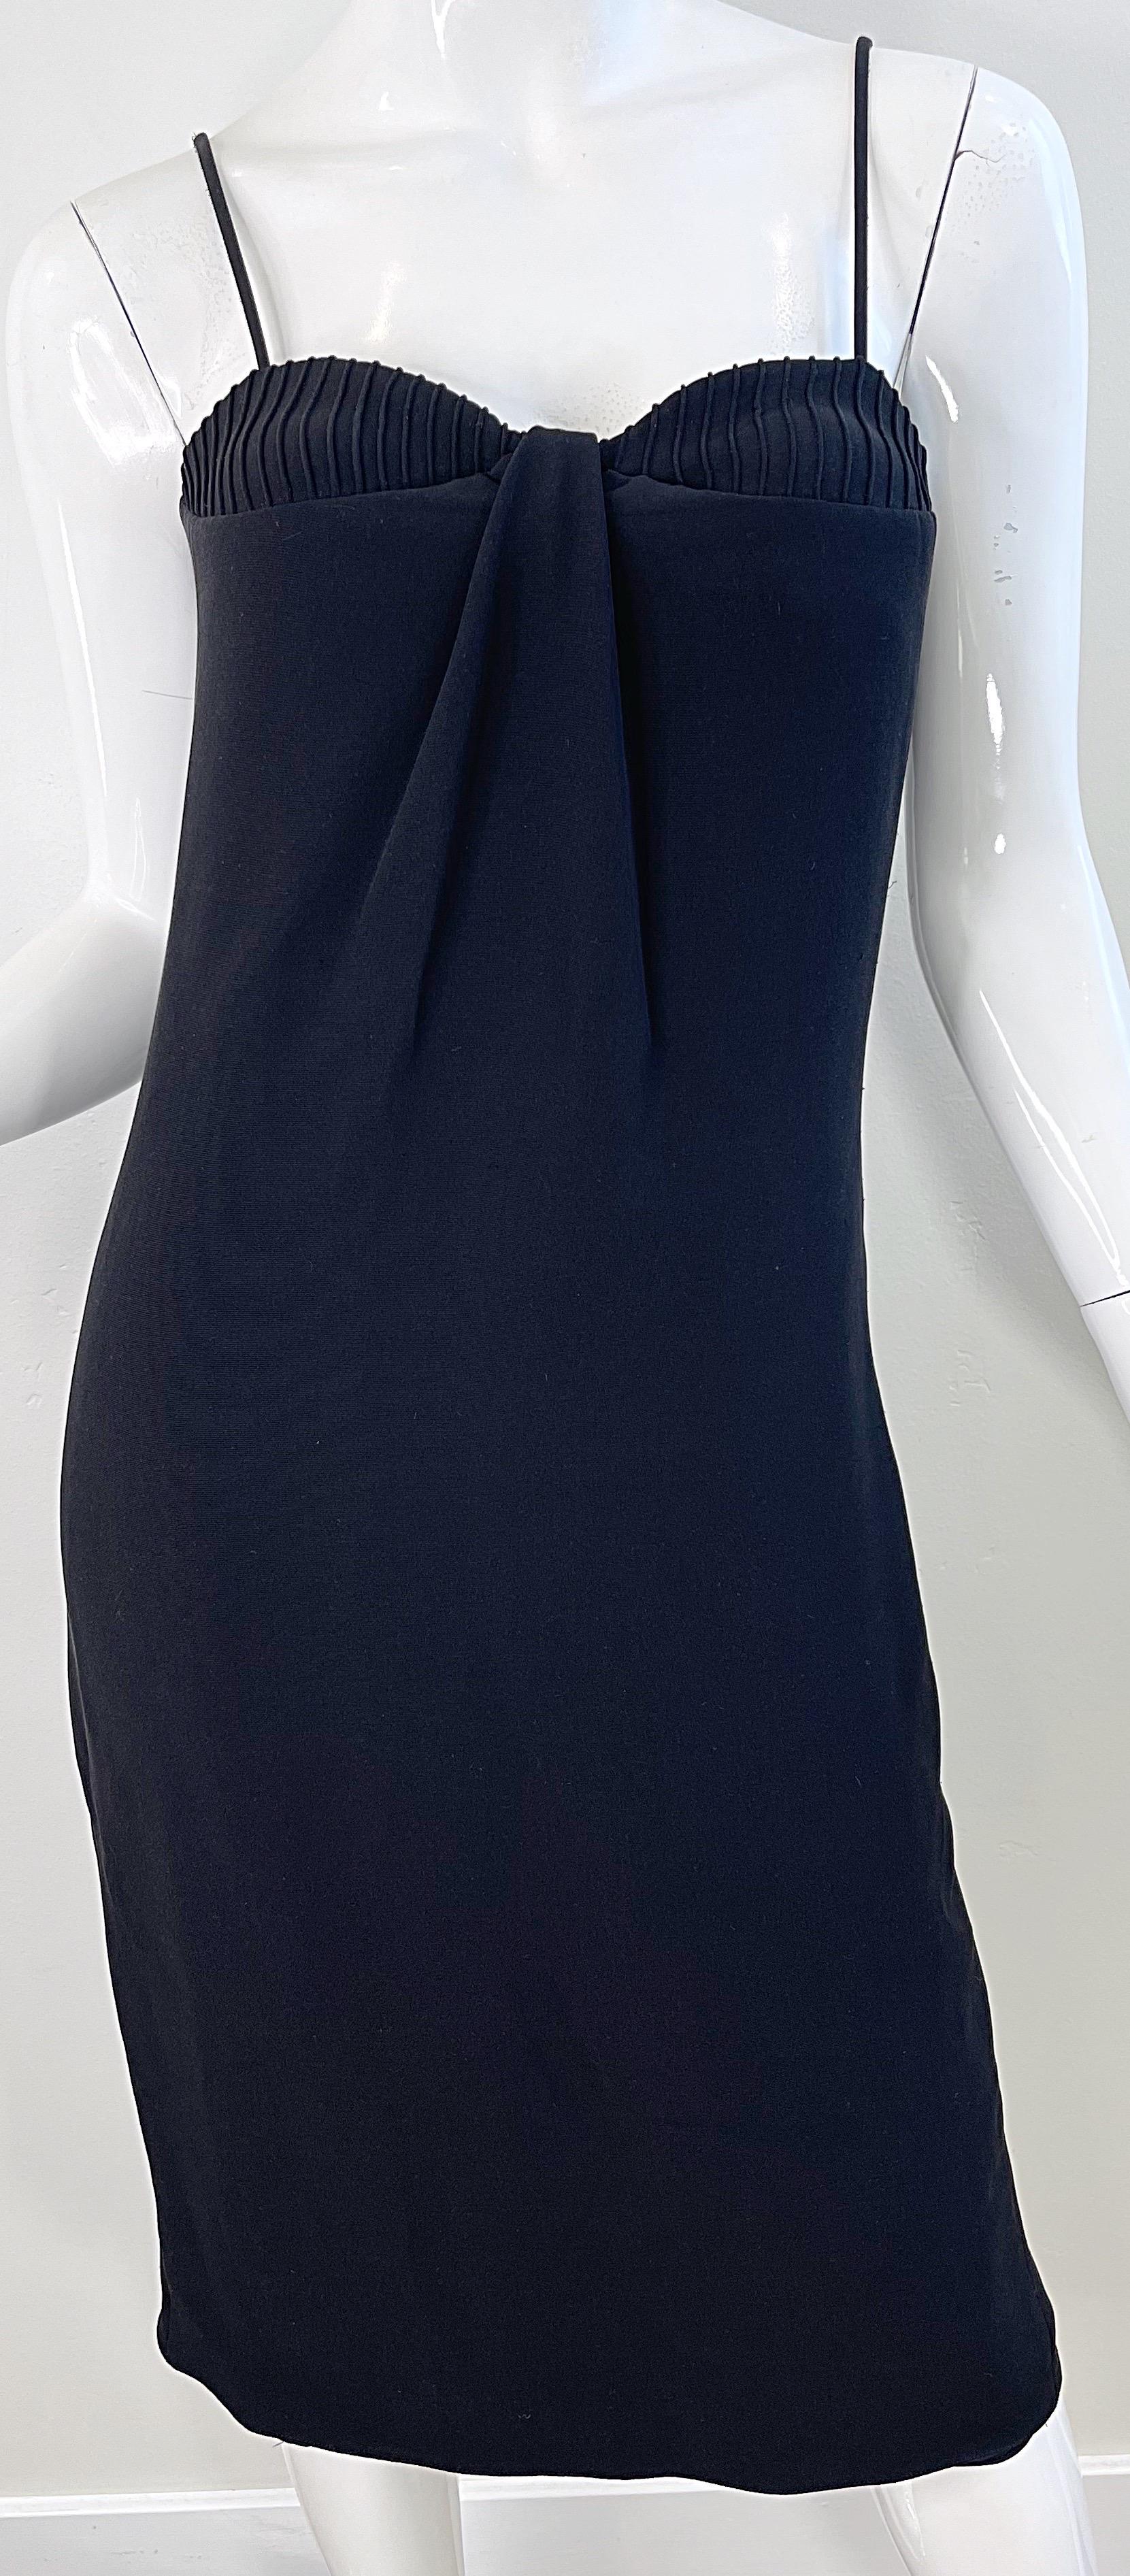 NWT Brandon Maxwell Spring 2018 Runway Size 2 / 4 Black Silk Dress LBD For Sale 4